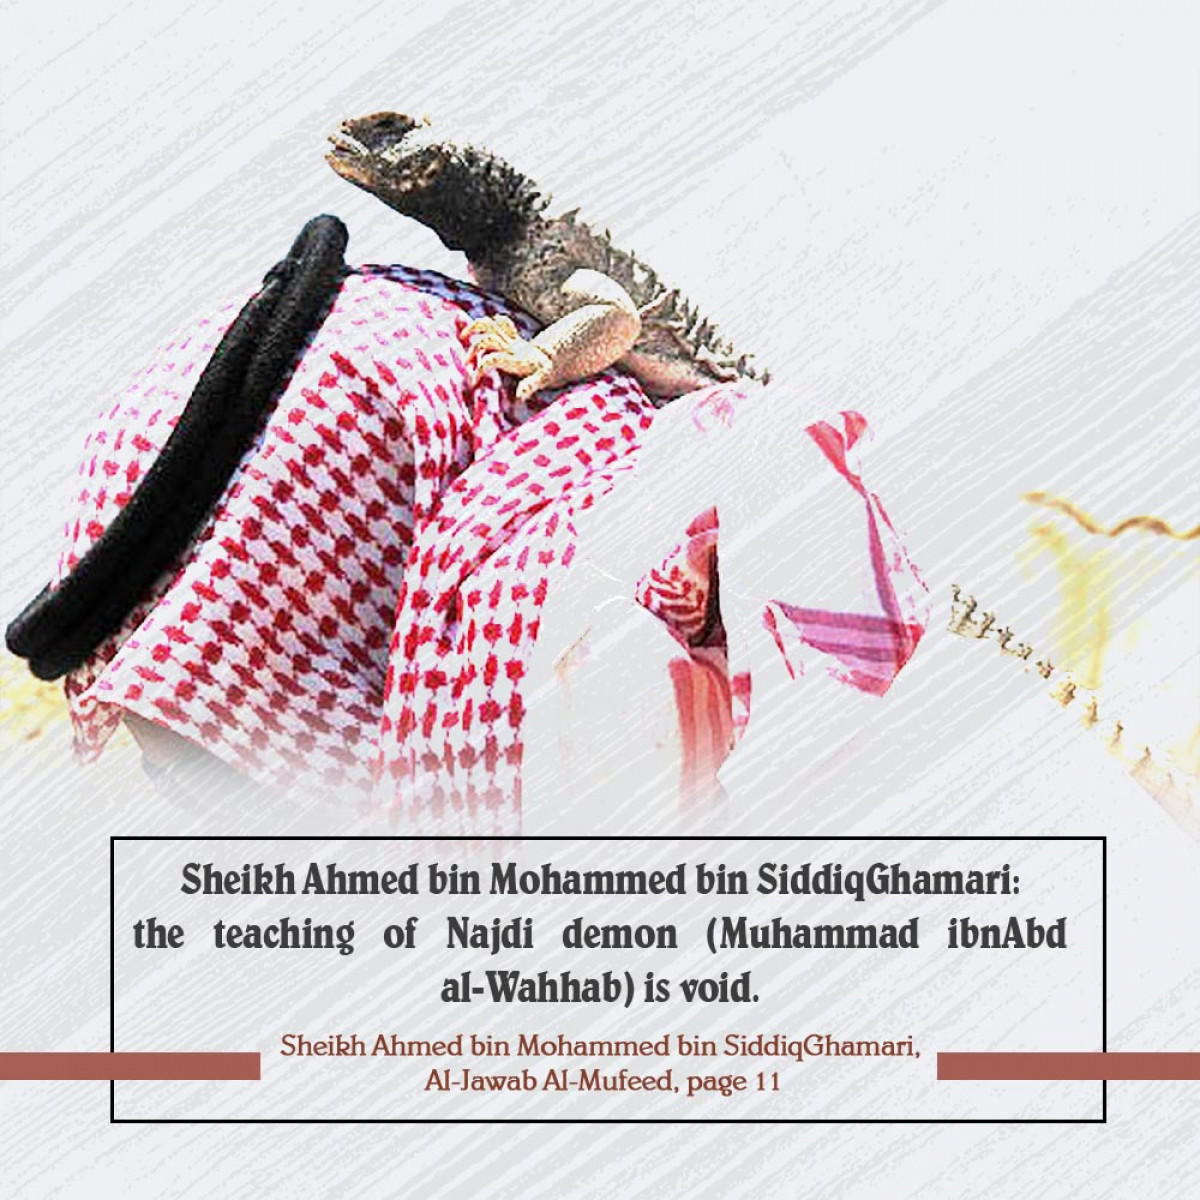 the teaching of Najdi demon (Muhammad ibnAbd al-Wahhab) is void